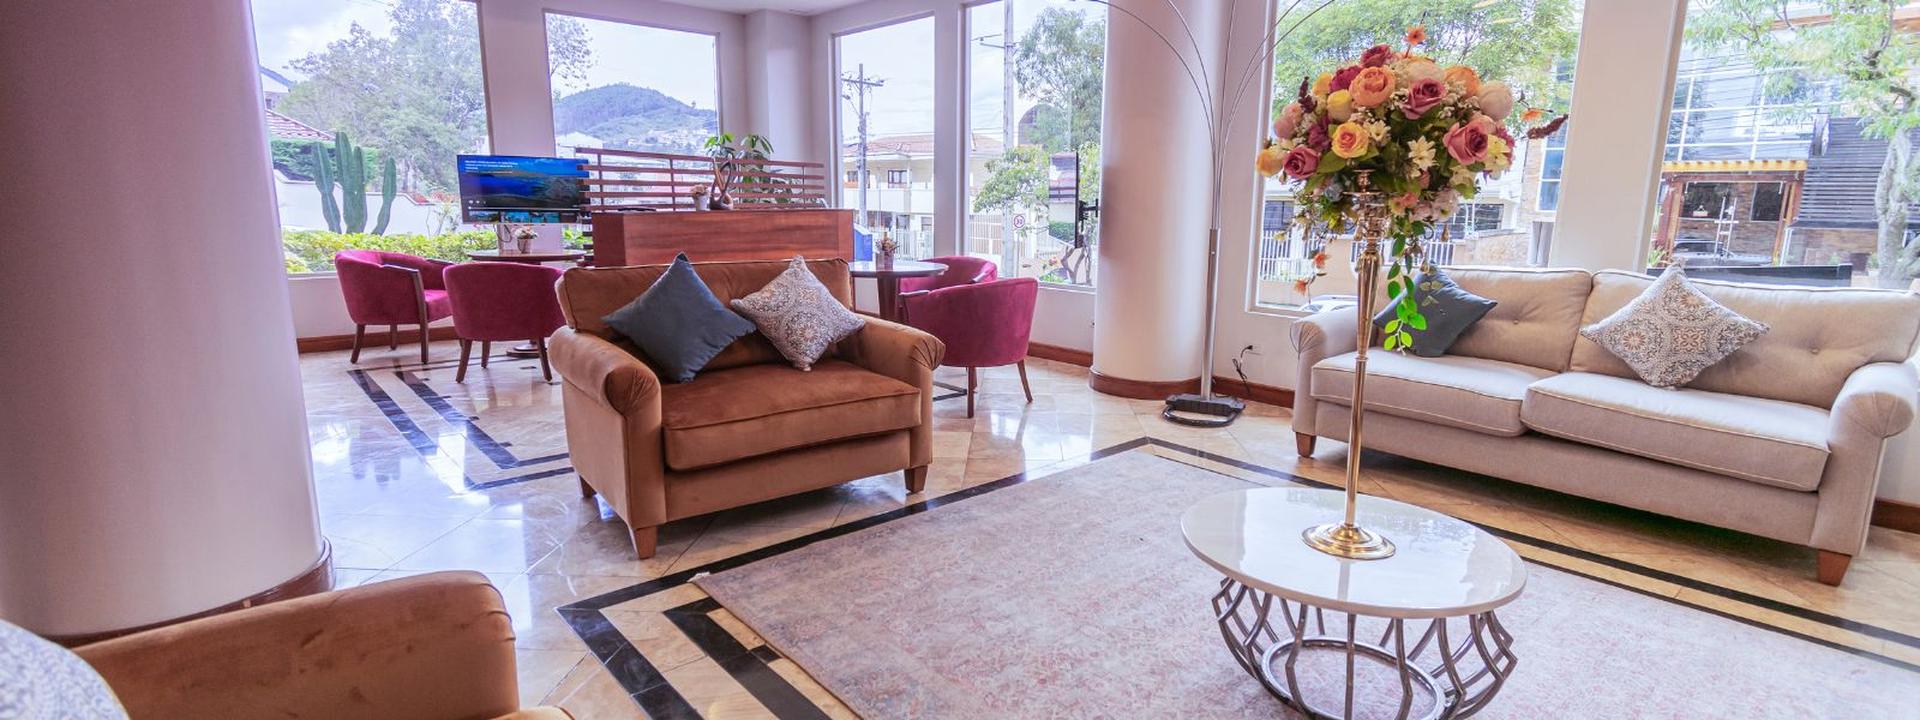 Live a unique experience in Loja, Ecuador GHL Hotels